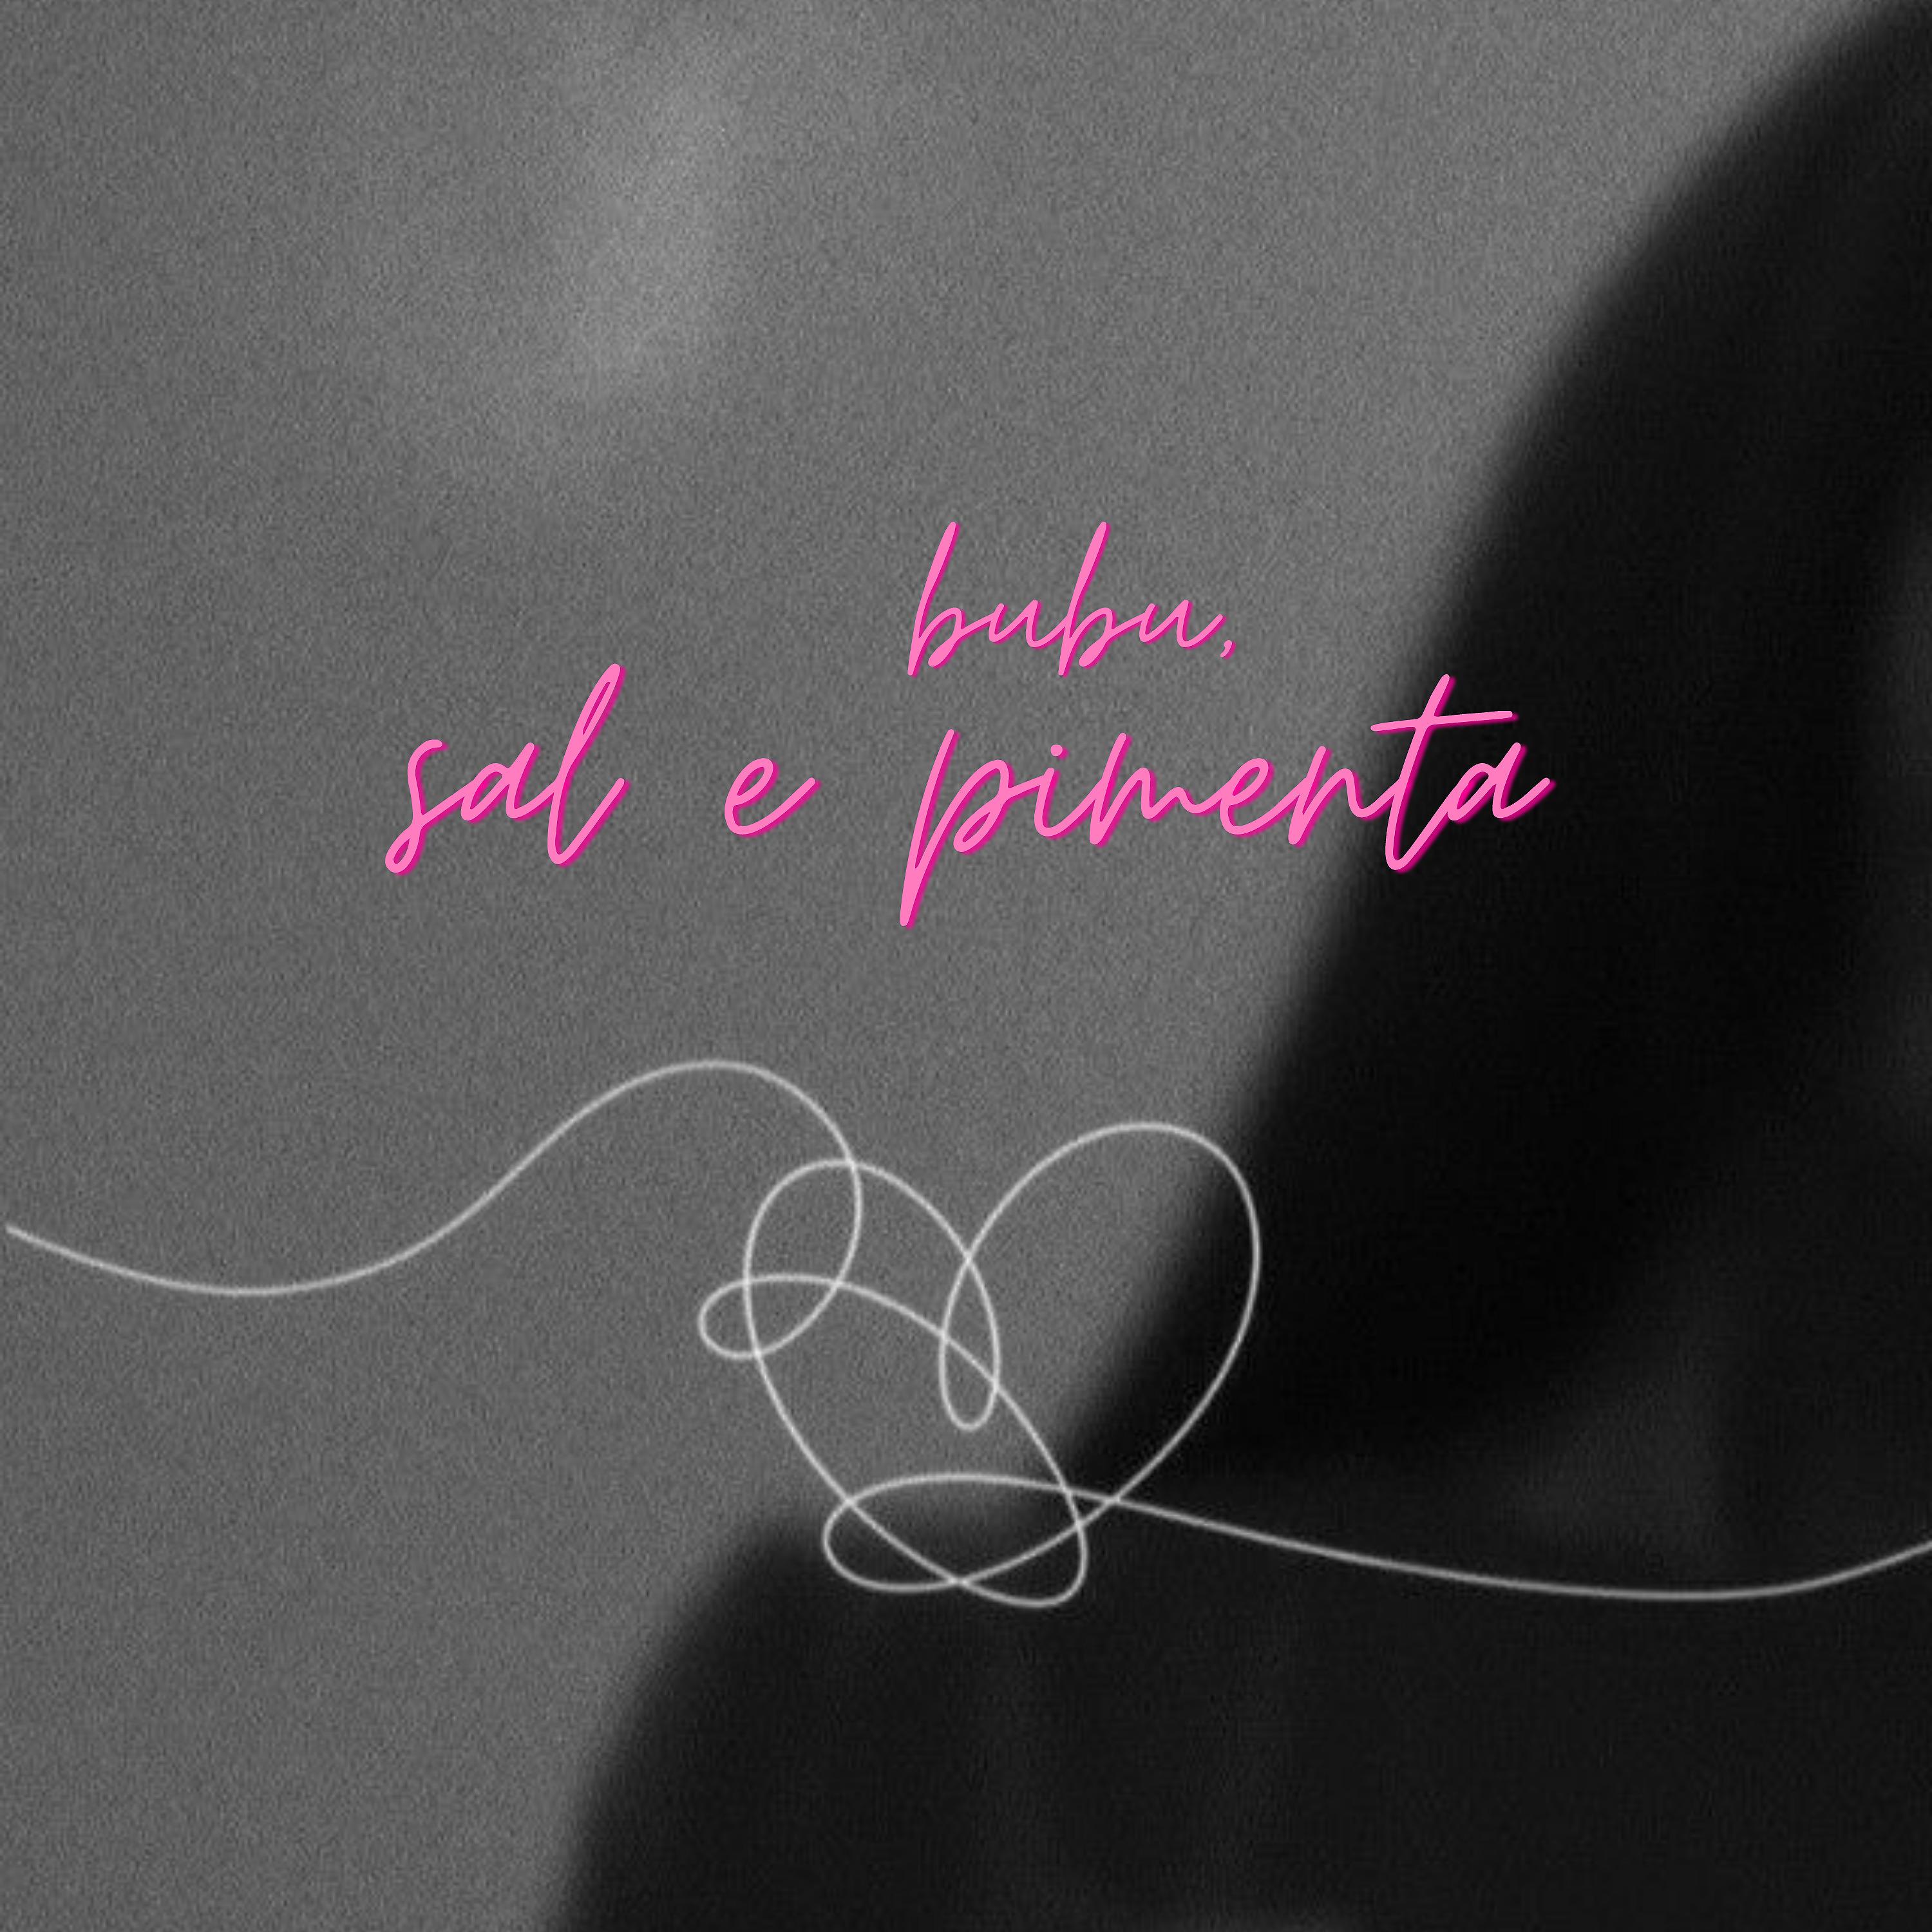 Постер альбома Bubu, Sal e Pimenta